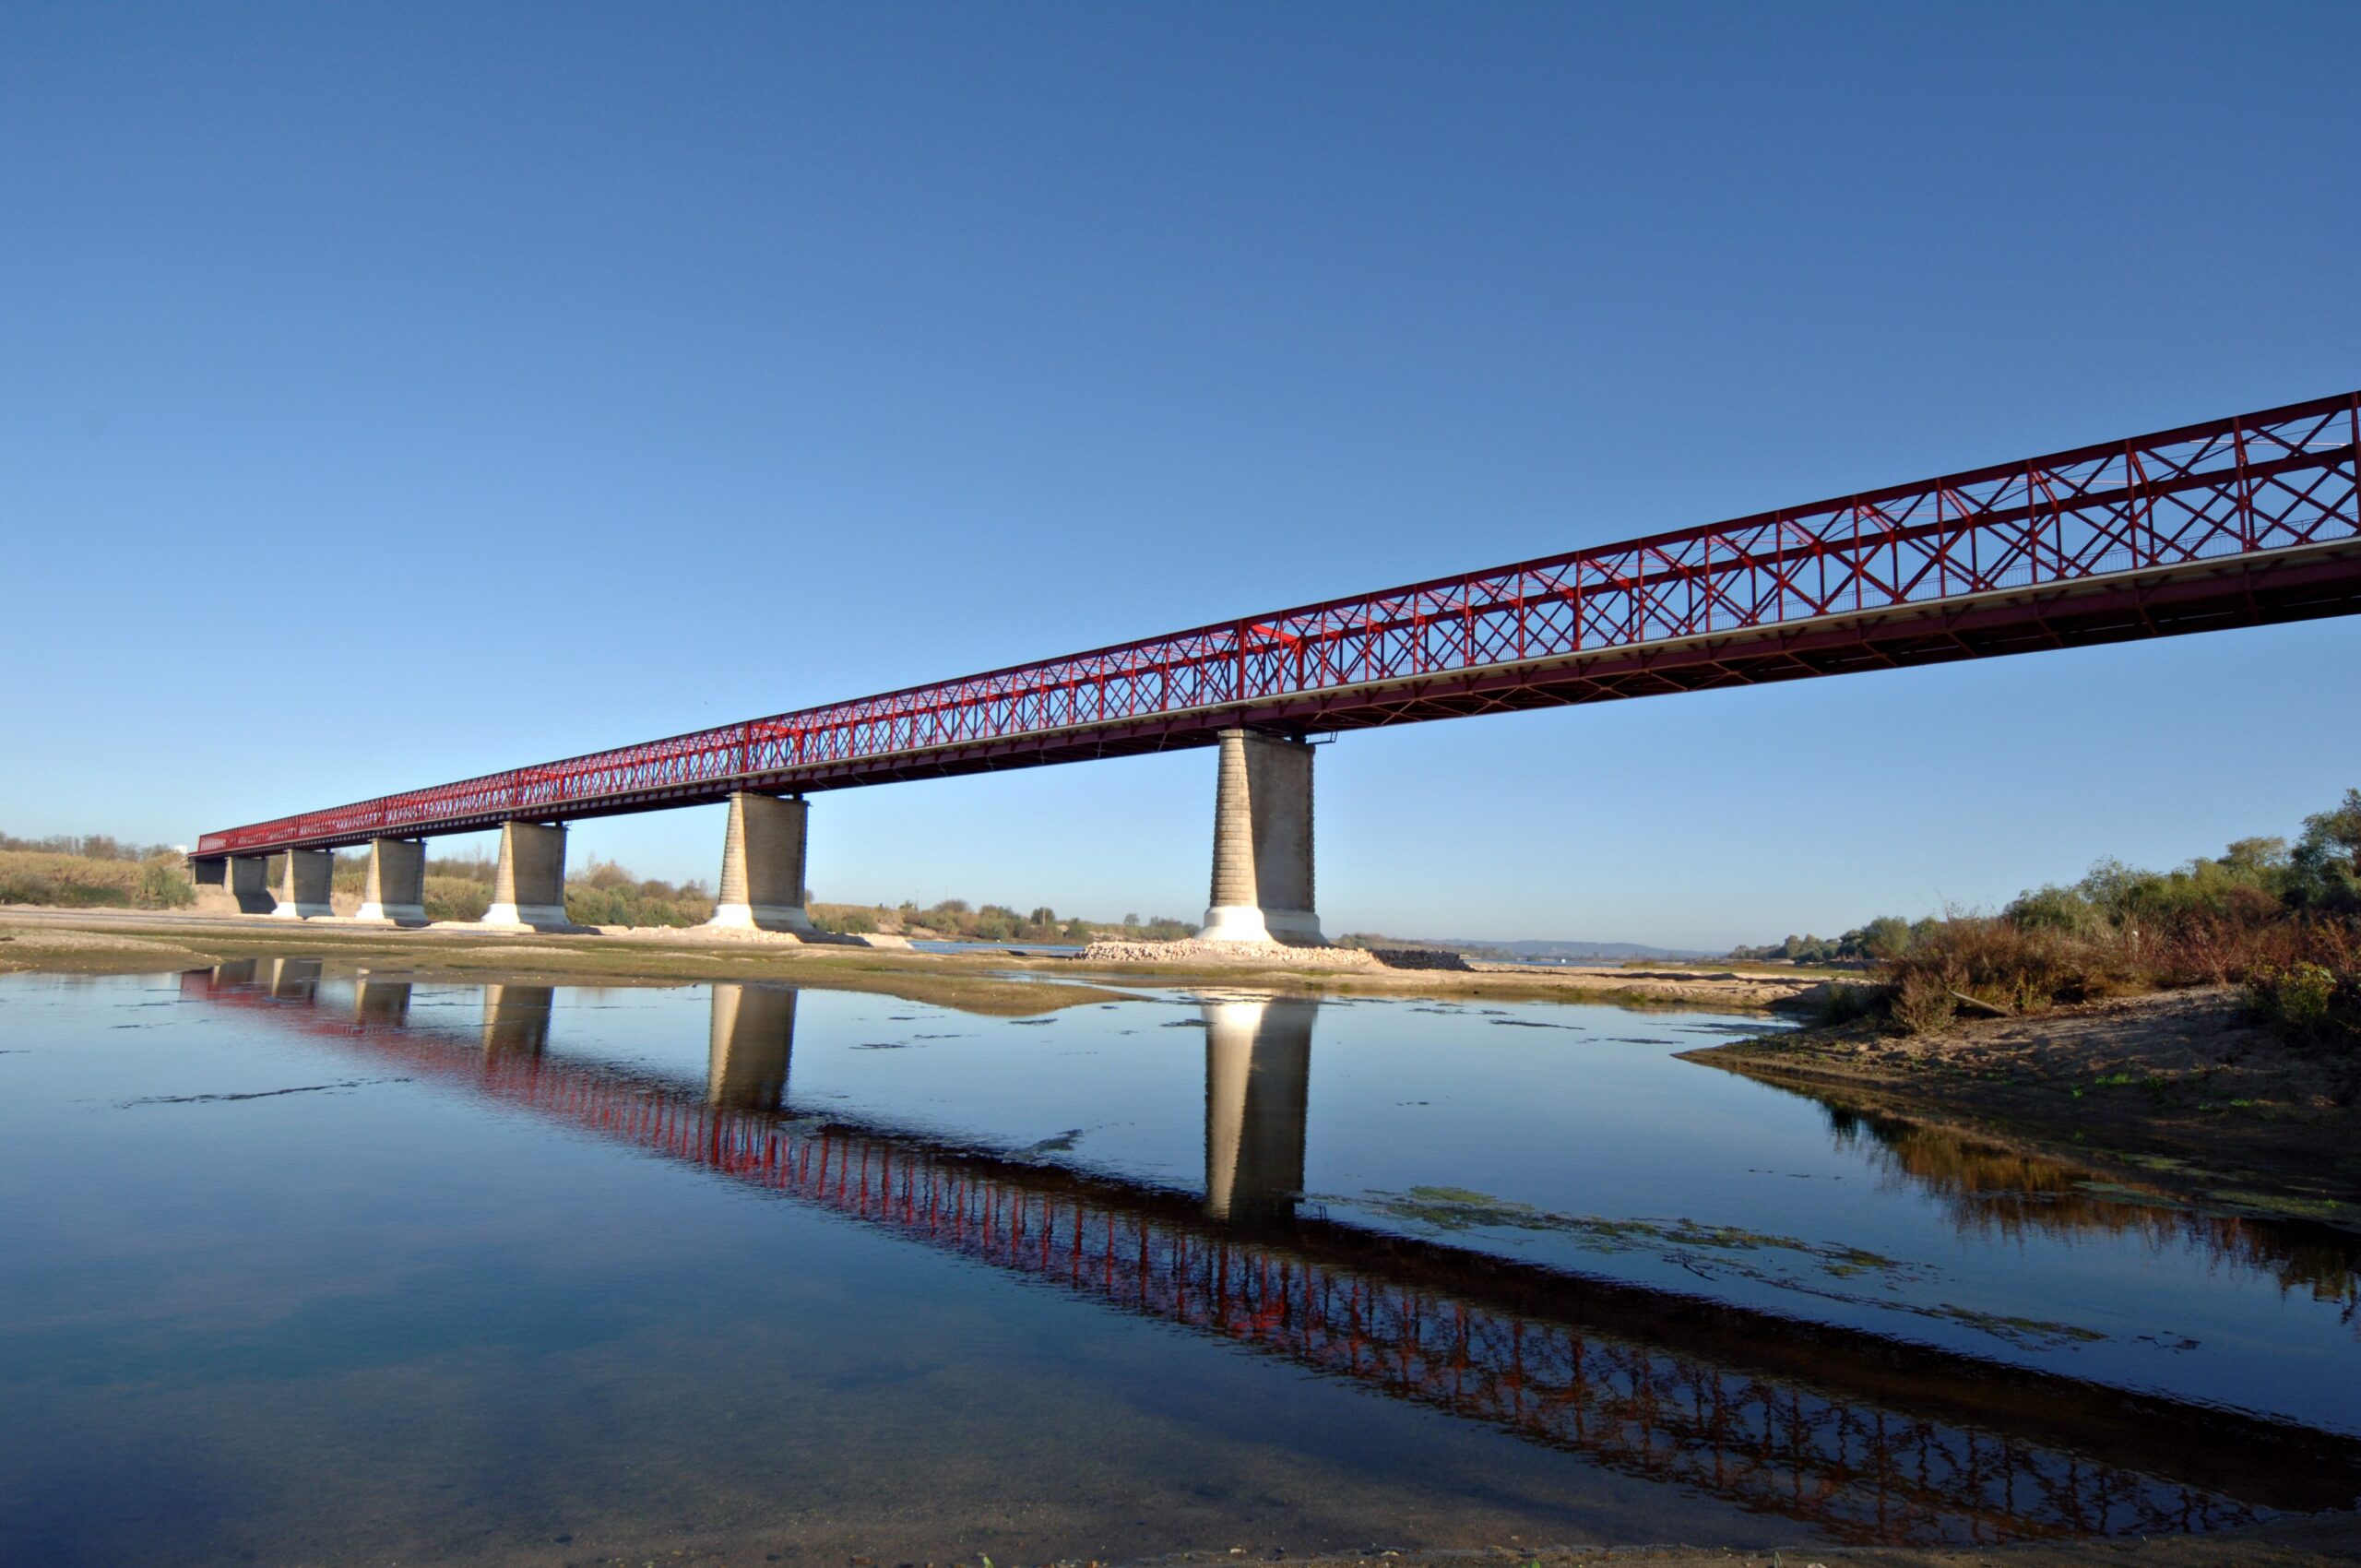 Chamusca Steel Bridge over the Tejo River